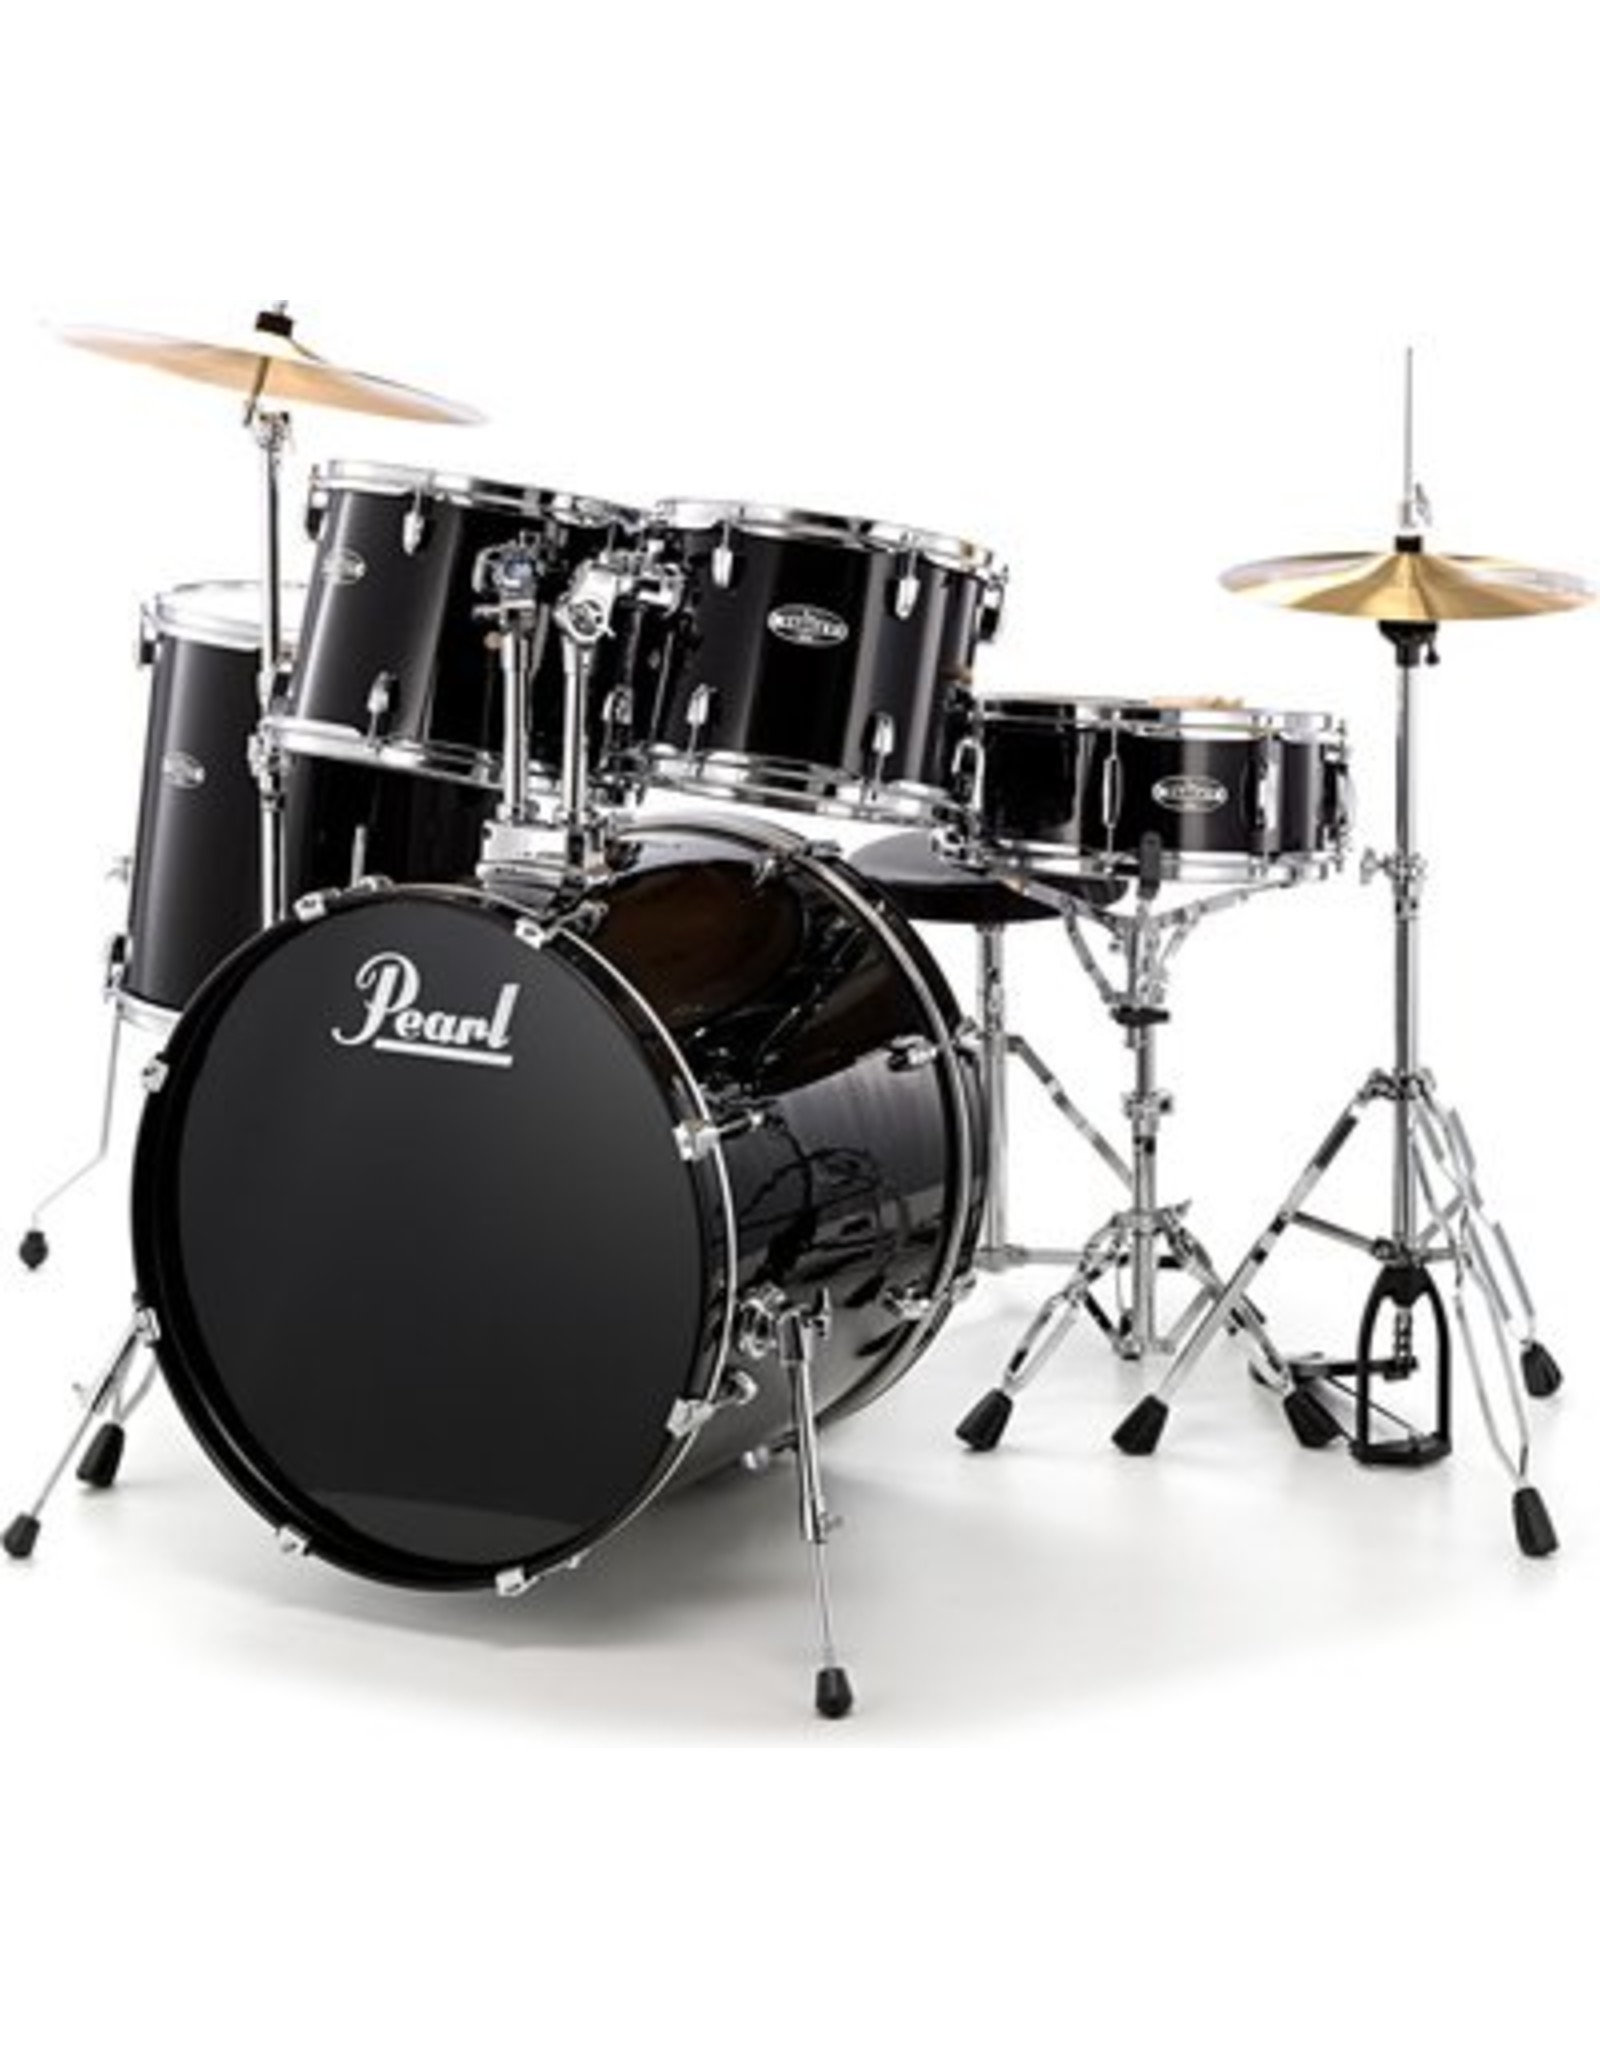 Pearl Target TGXC605C Drum-Kit 20 10 12 14 14